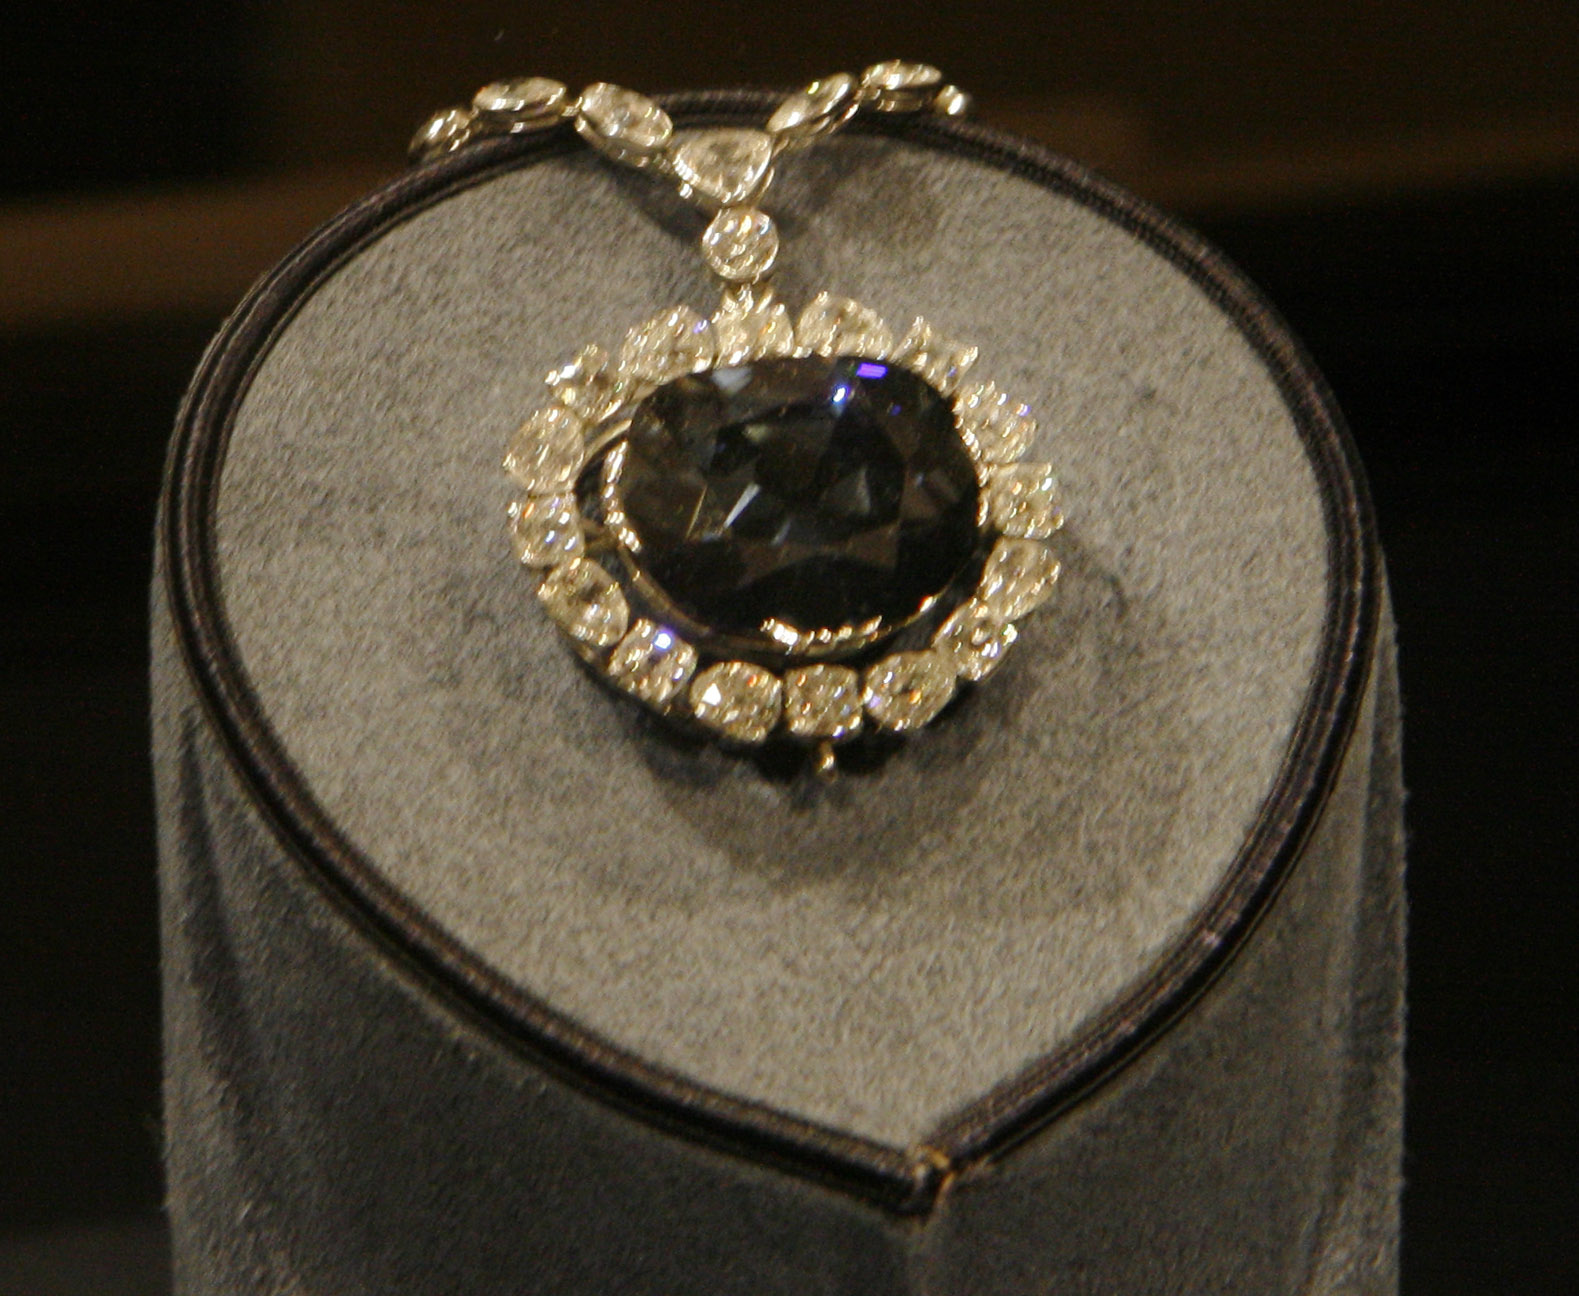 File:The Hope Diamond (107006041).jpg - Wikimedia Commons